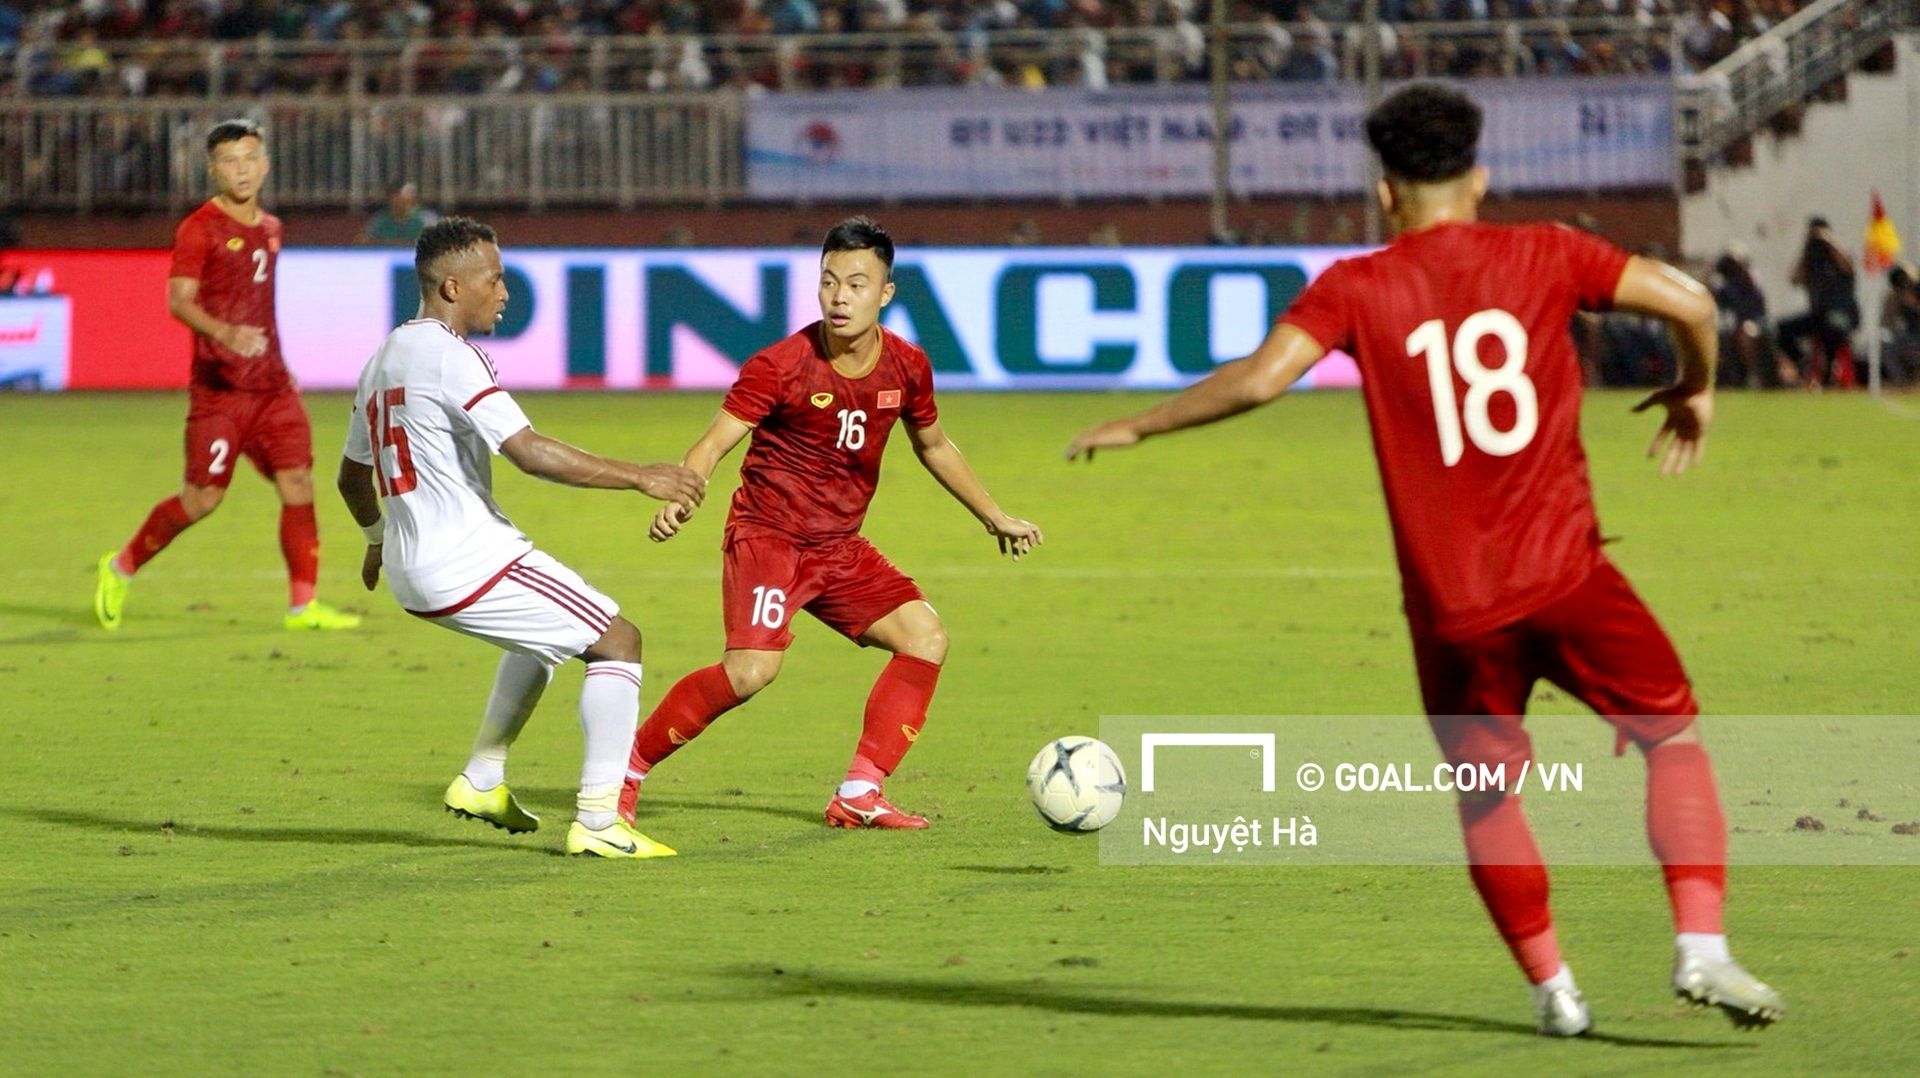 Do Thanh Thinh | U22 Vietnam vs U22 UAE | Friendly Match | 13 October 2019